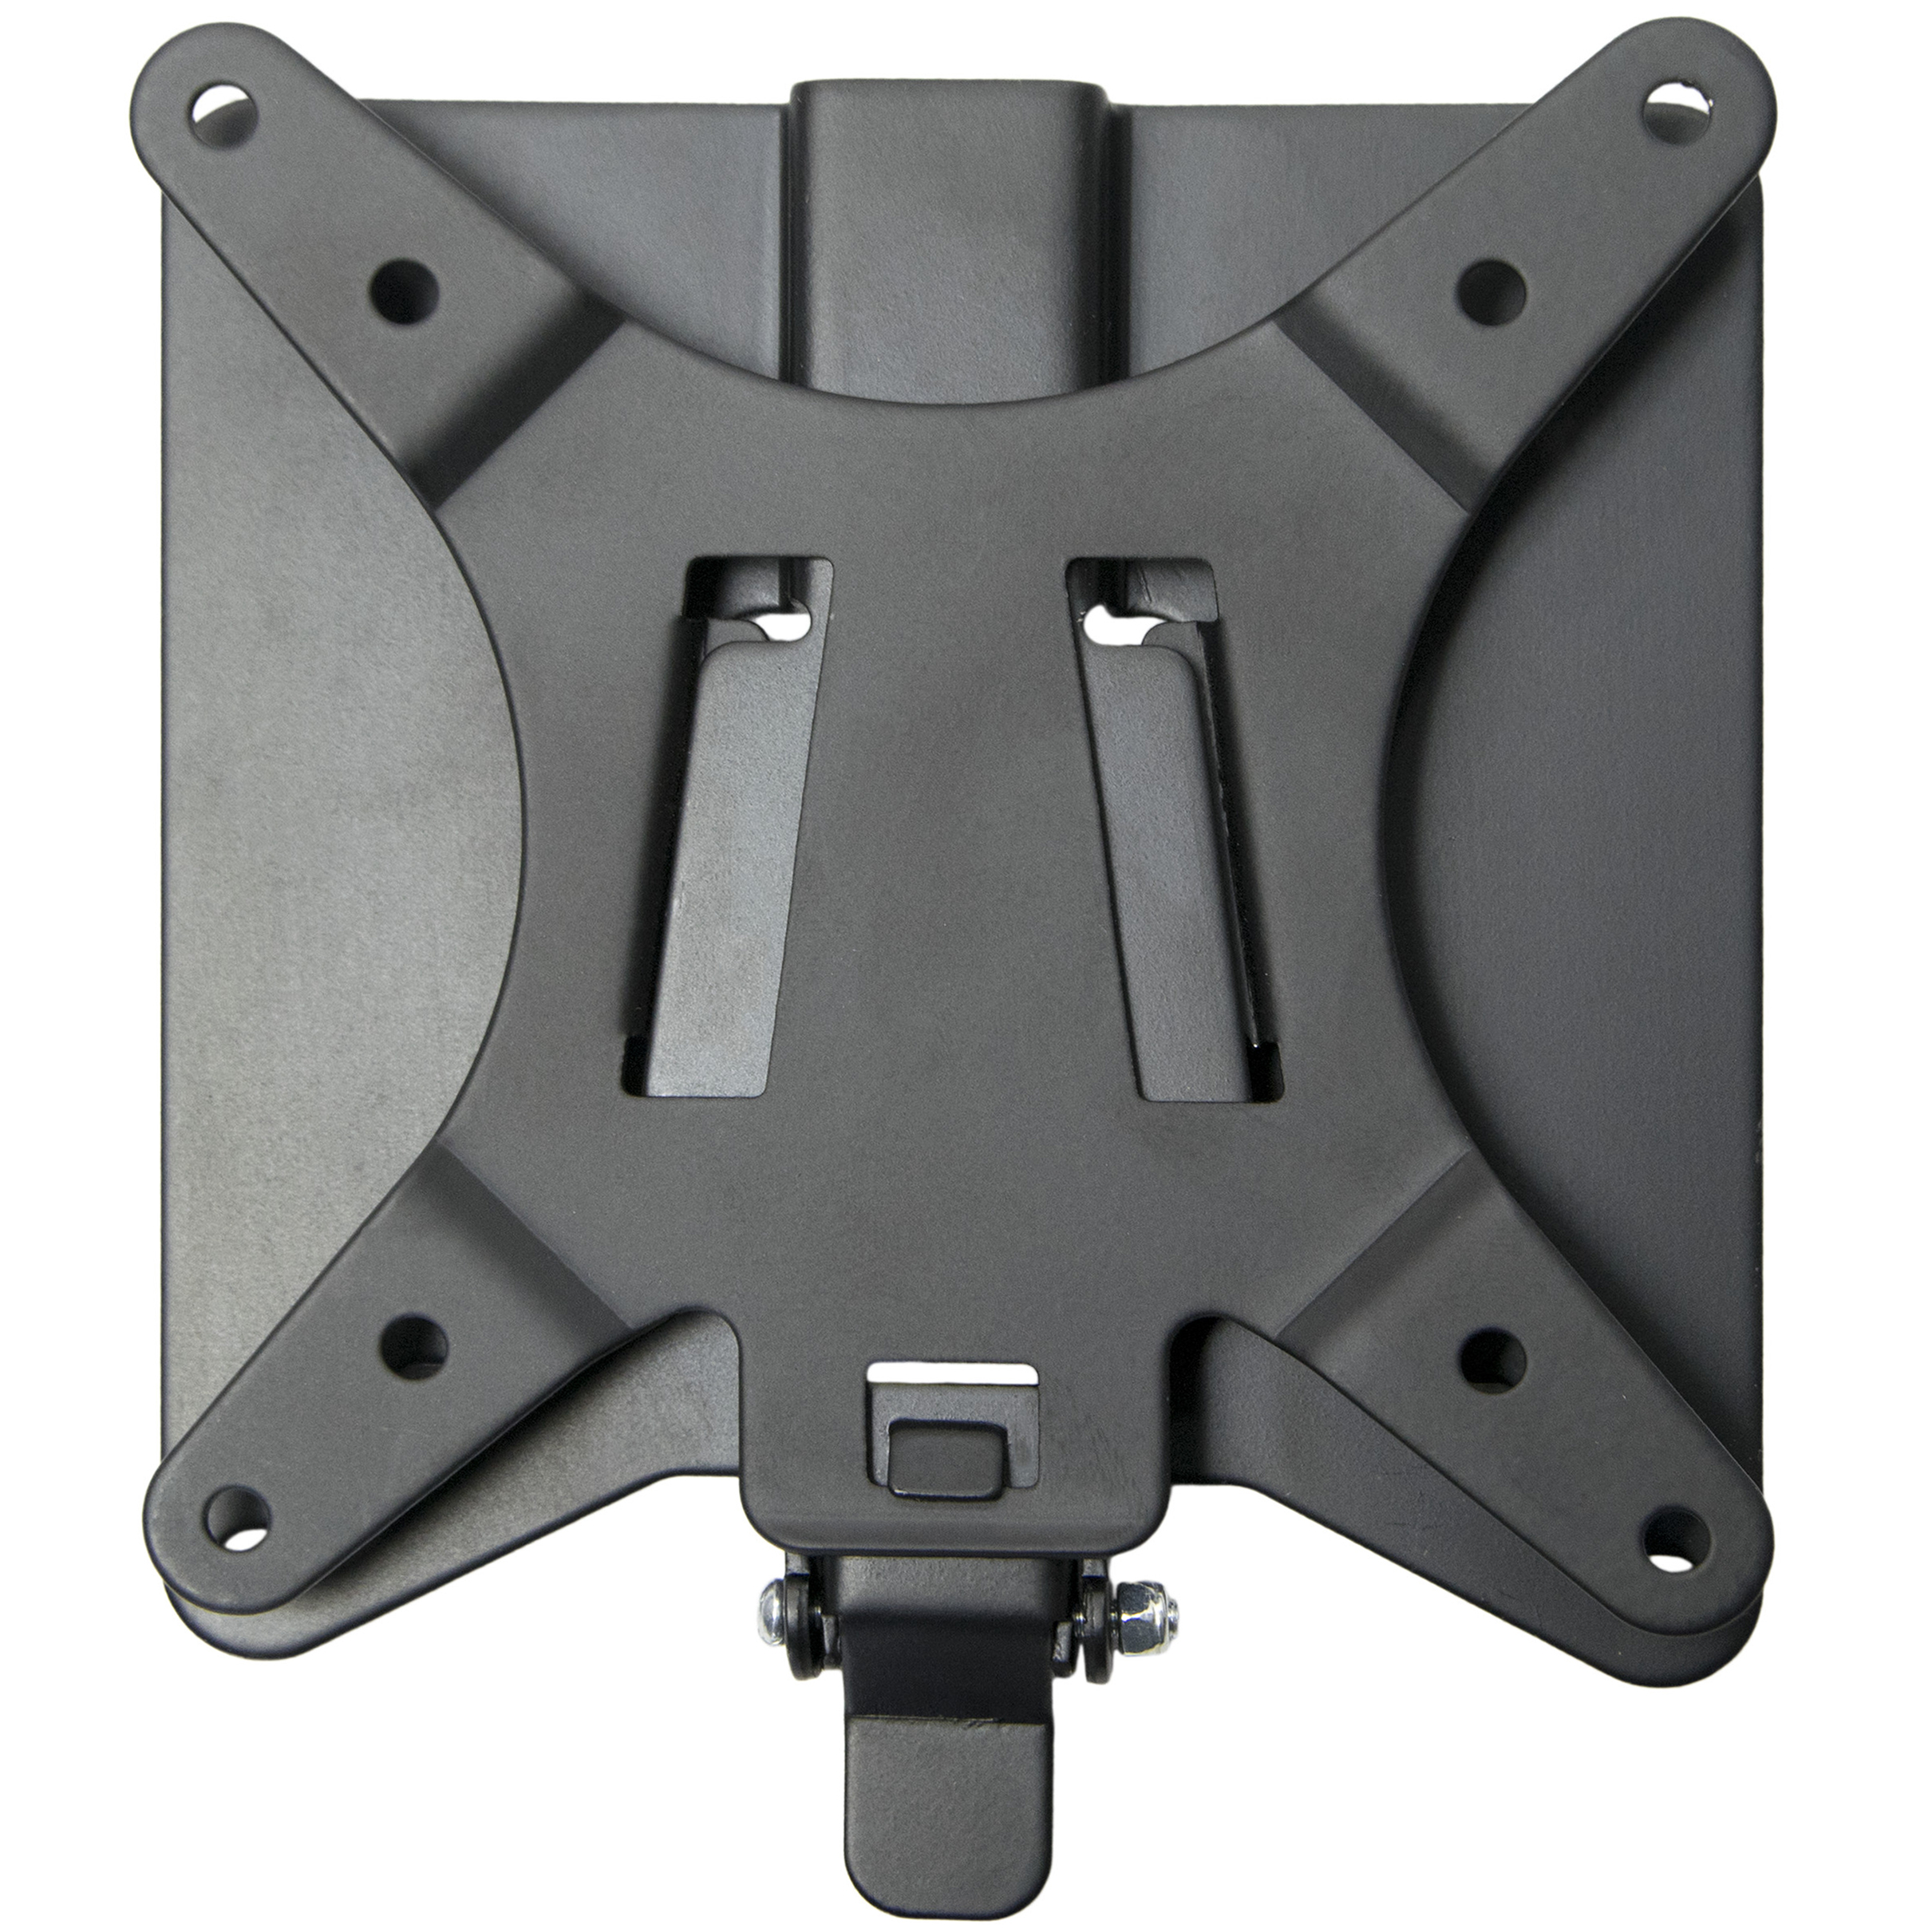 stand vesa mount bracket monitor adapter attachment kit vivo easy